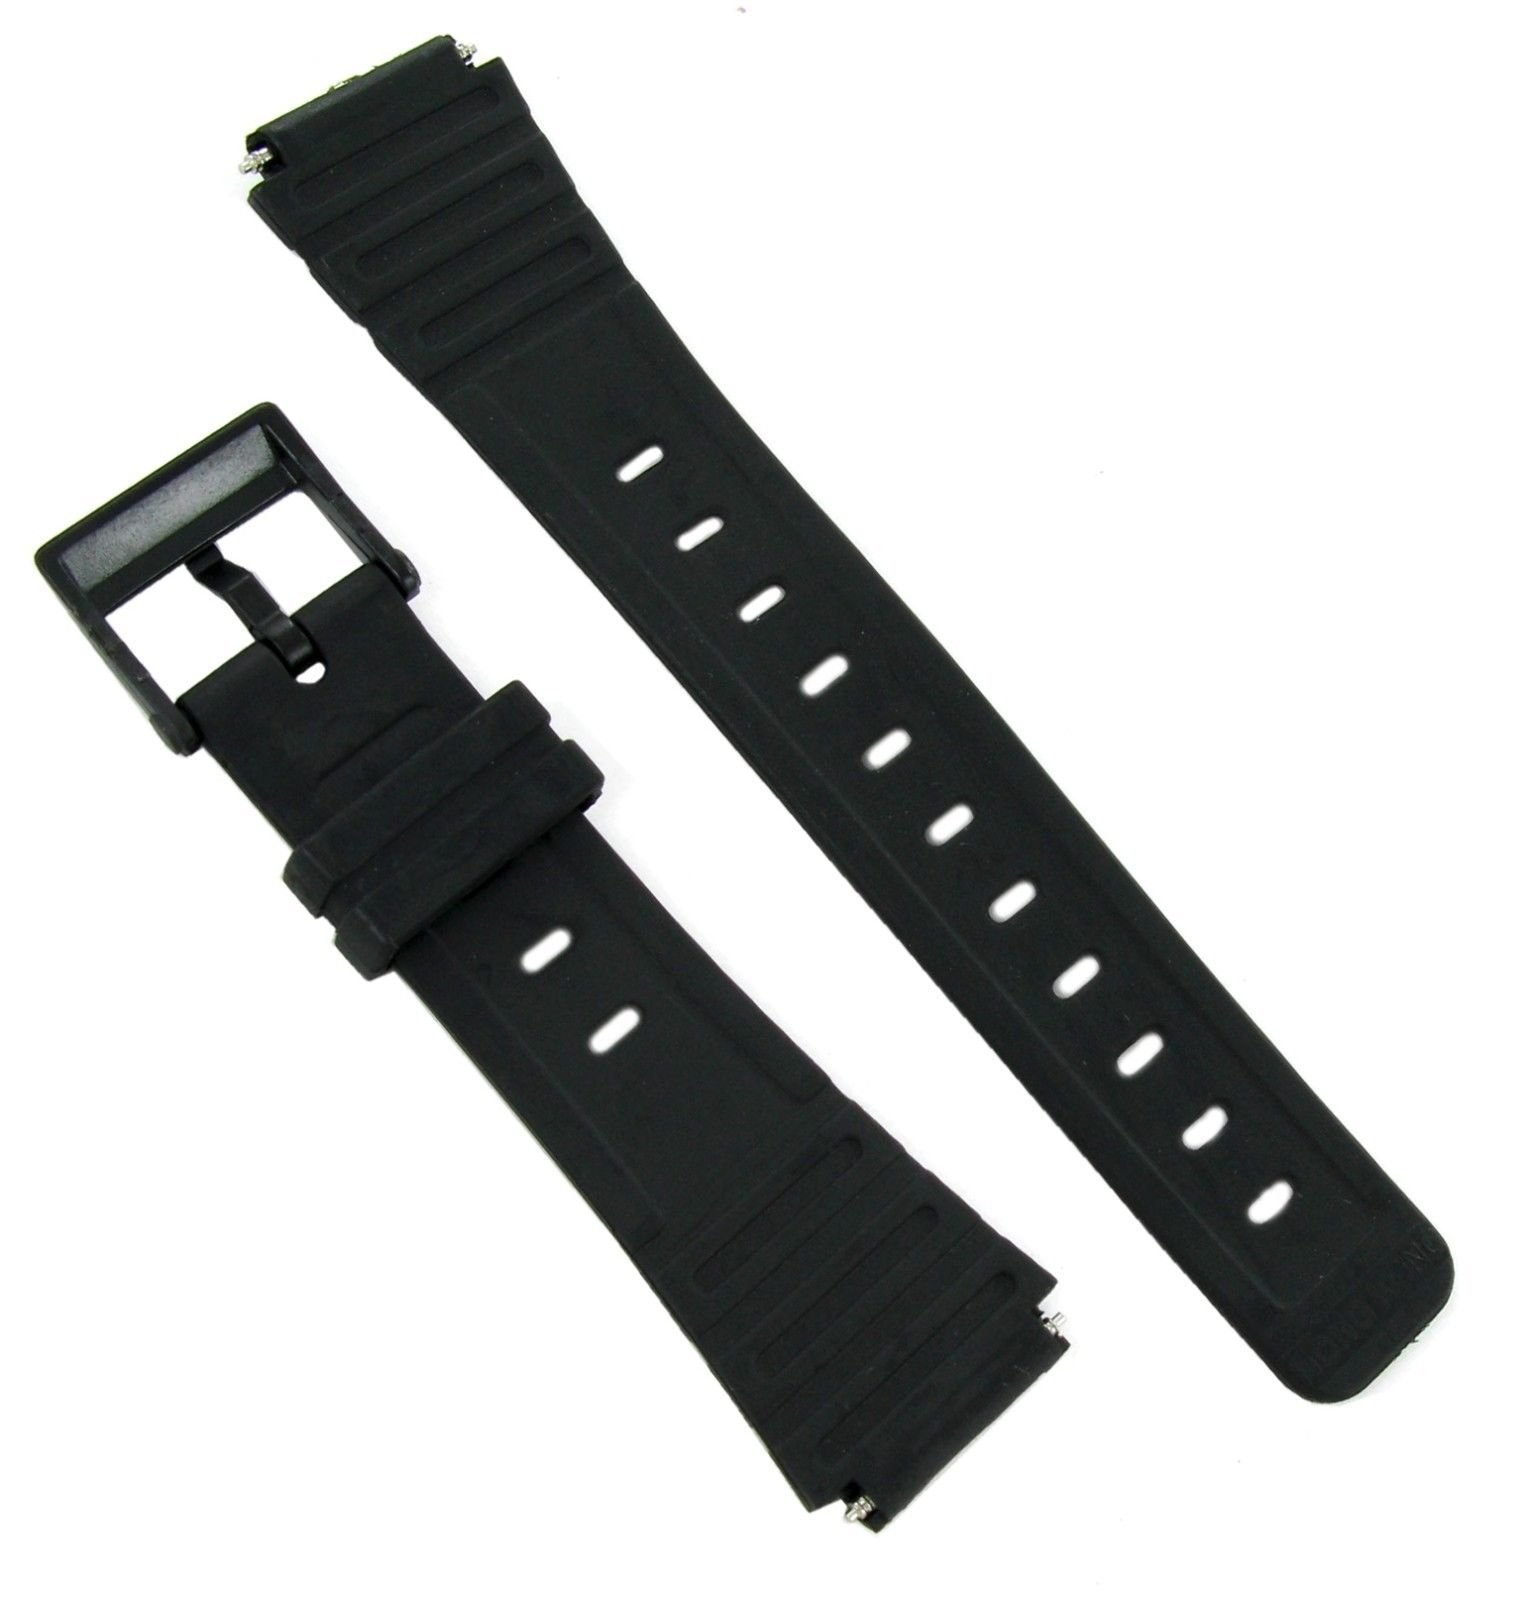 18mm Kreisler Polyurethane Rubber Black Watch Band Mens PS 9